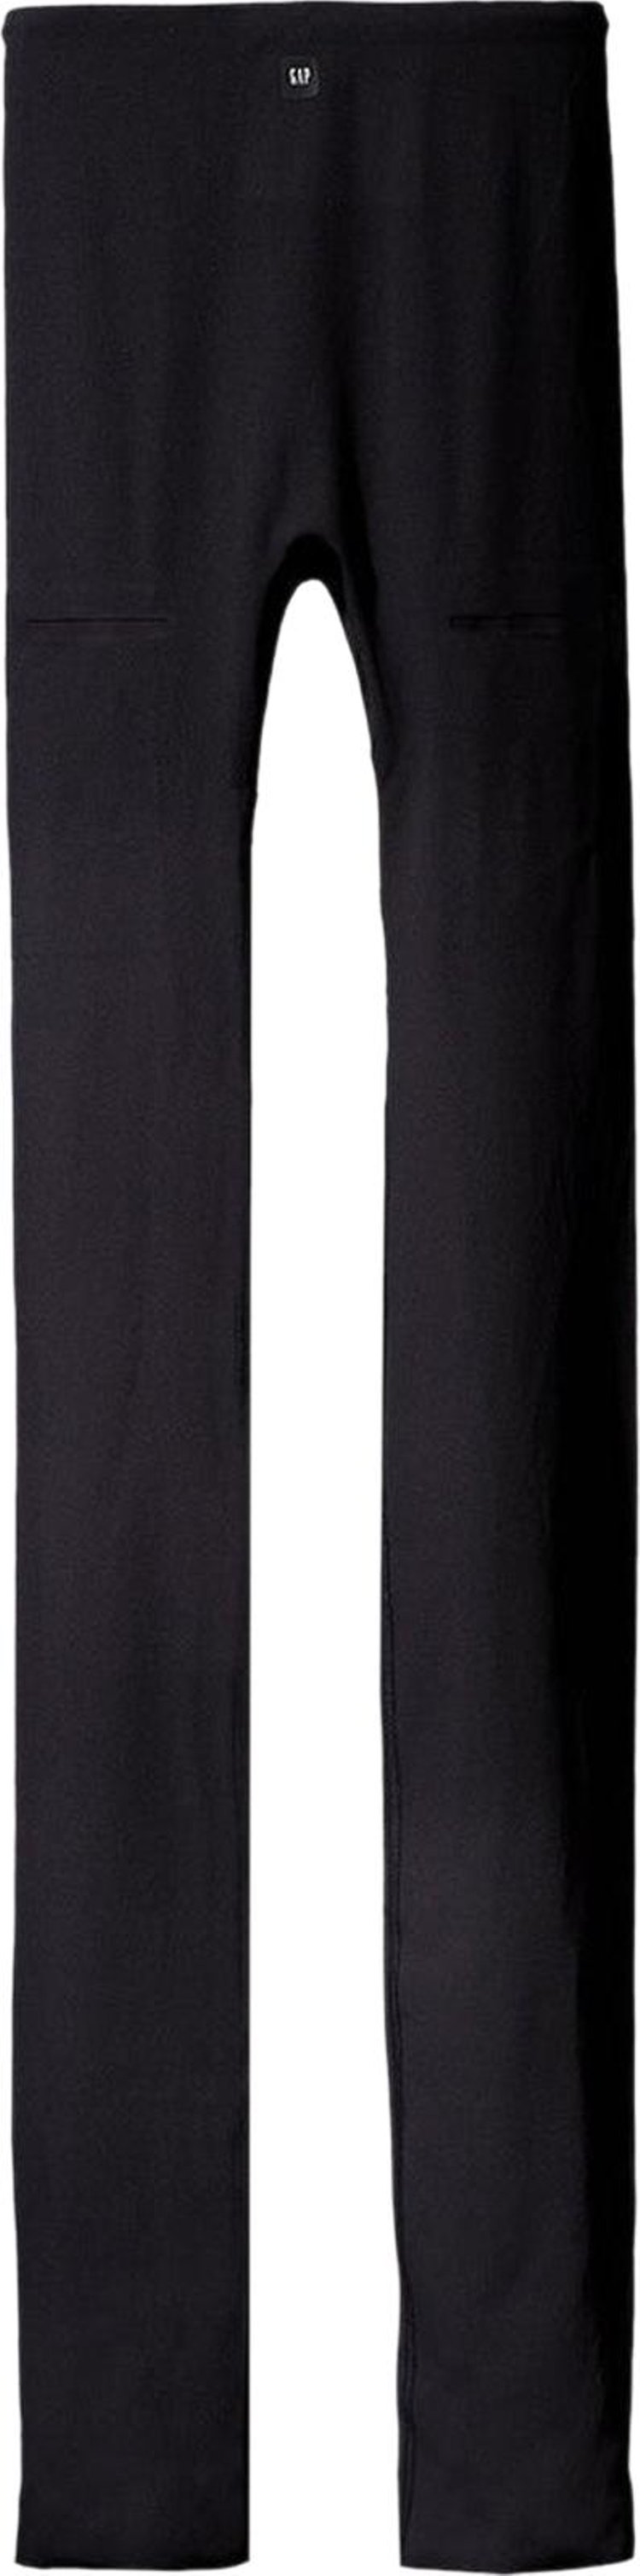 Yeezy Gap Engineered by Balenciaga Long Legging 'Black'